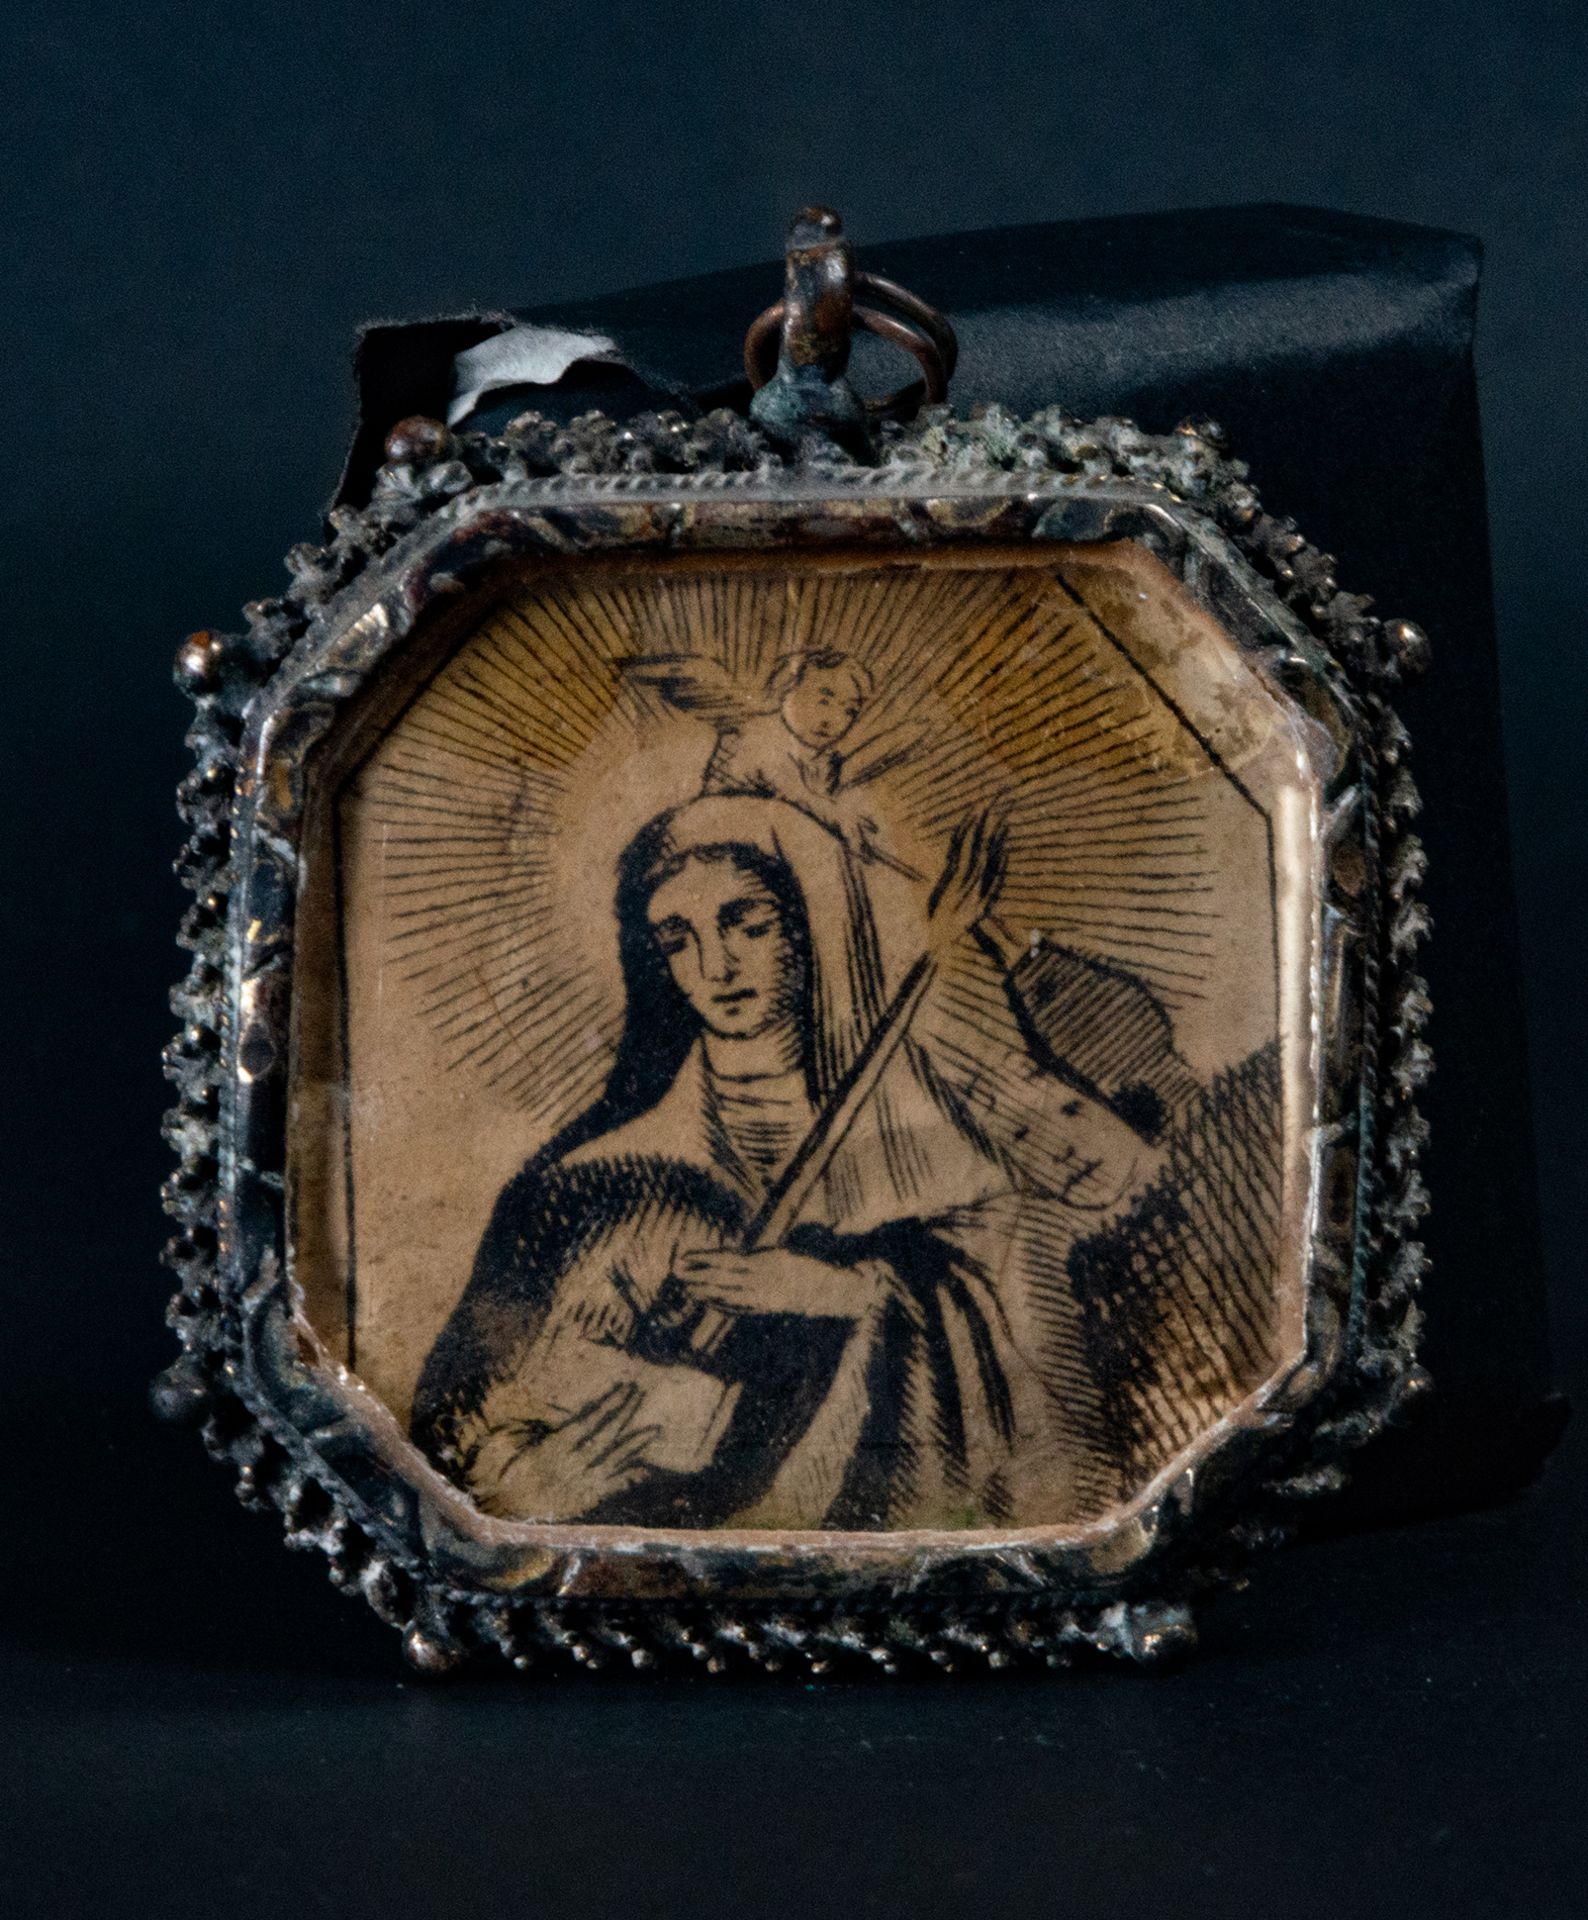 Octagonal Filigree Reliquary representing Saint Teresa, 17th century